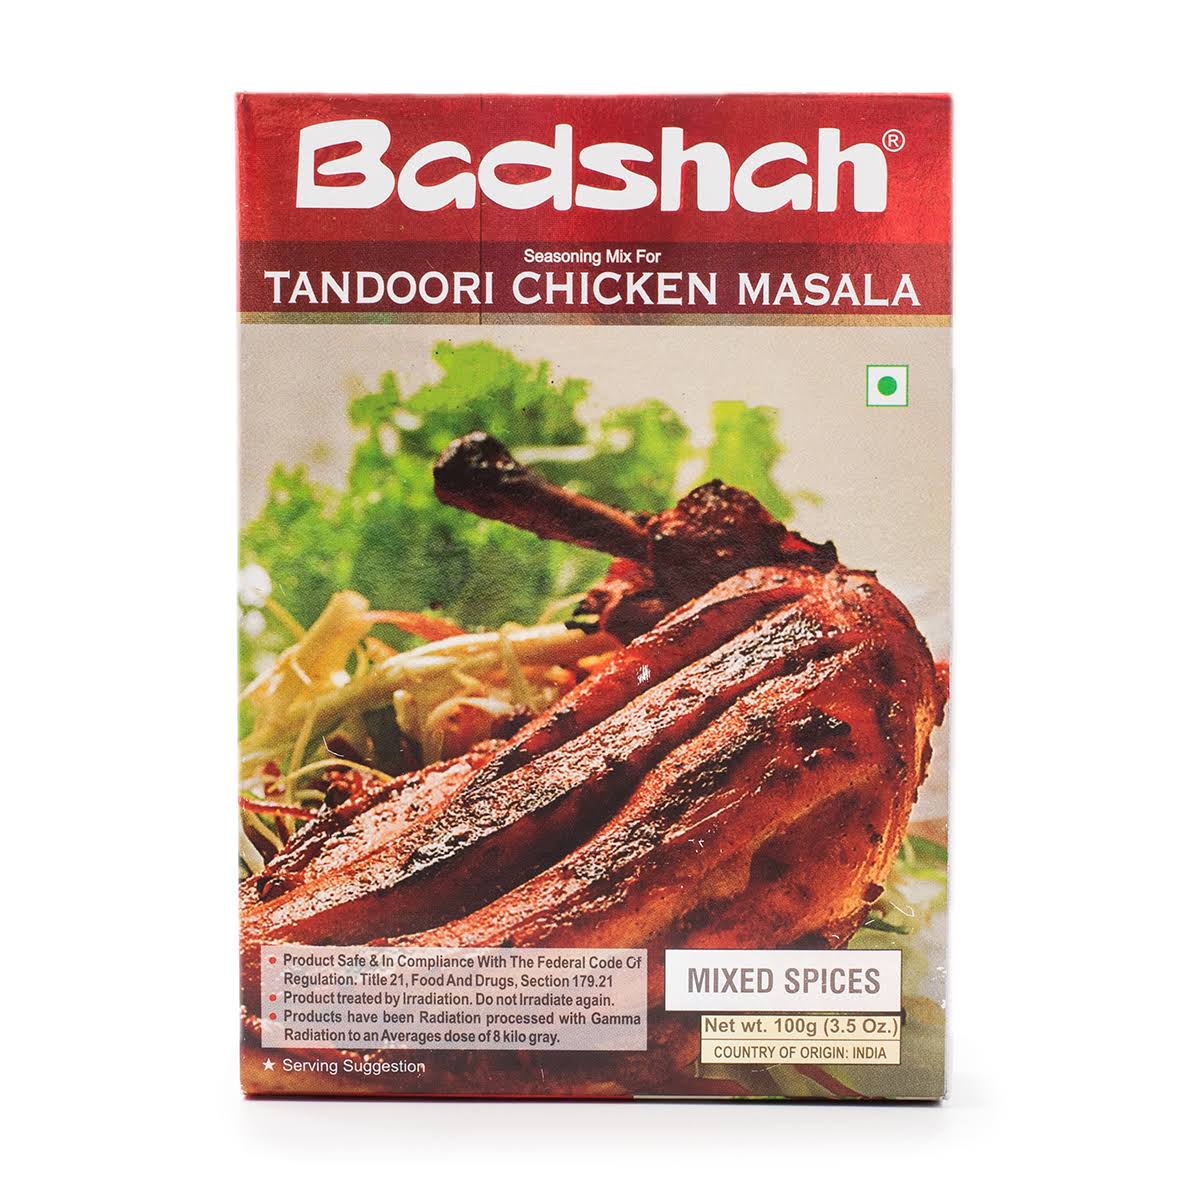 Badshah Seasoning Mix - Hot Chicken Masala